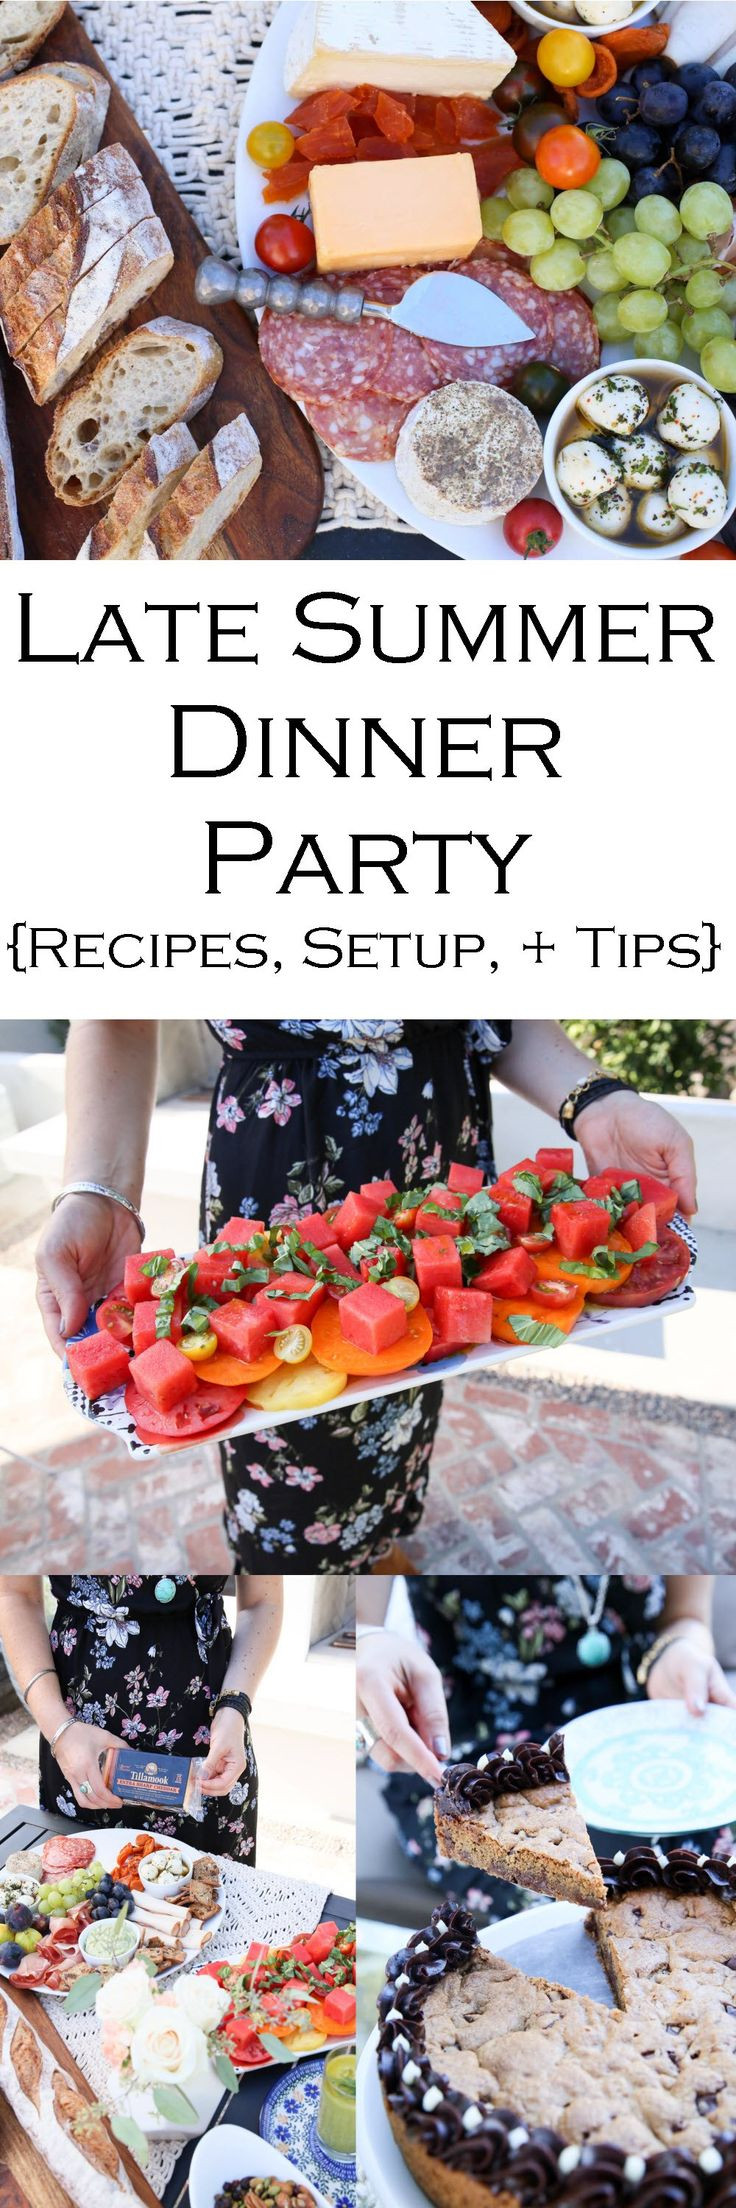 Easy Summer Dinner Party Menu Ideas
 Best 25 Summer dinner parties ideas on Pinterest